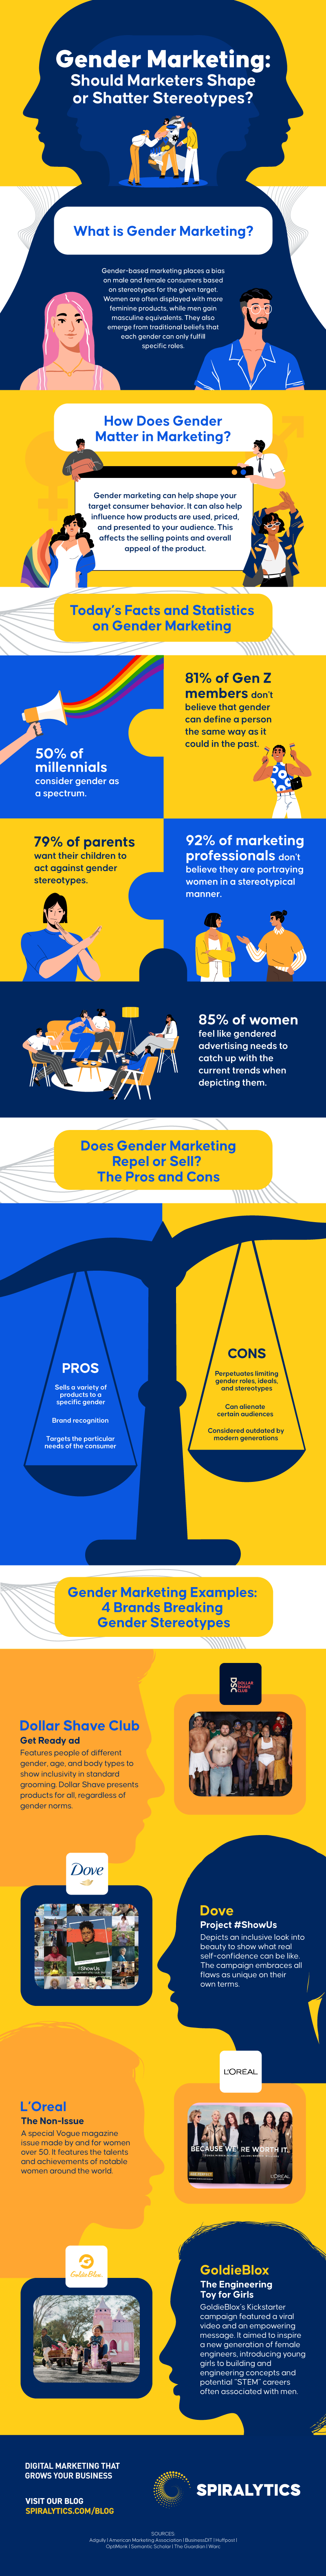 gender marketing, what is gender marketing, breaking gender stereotypes